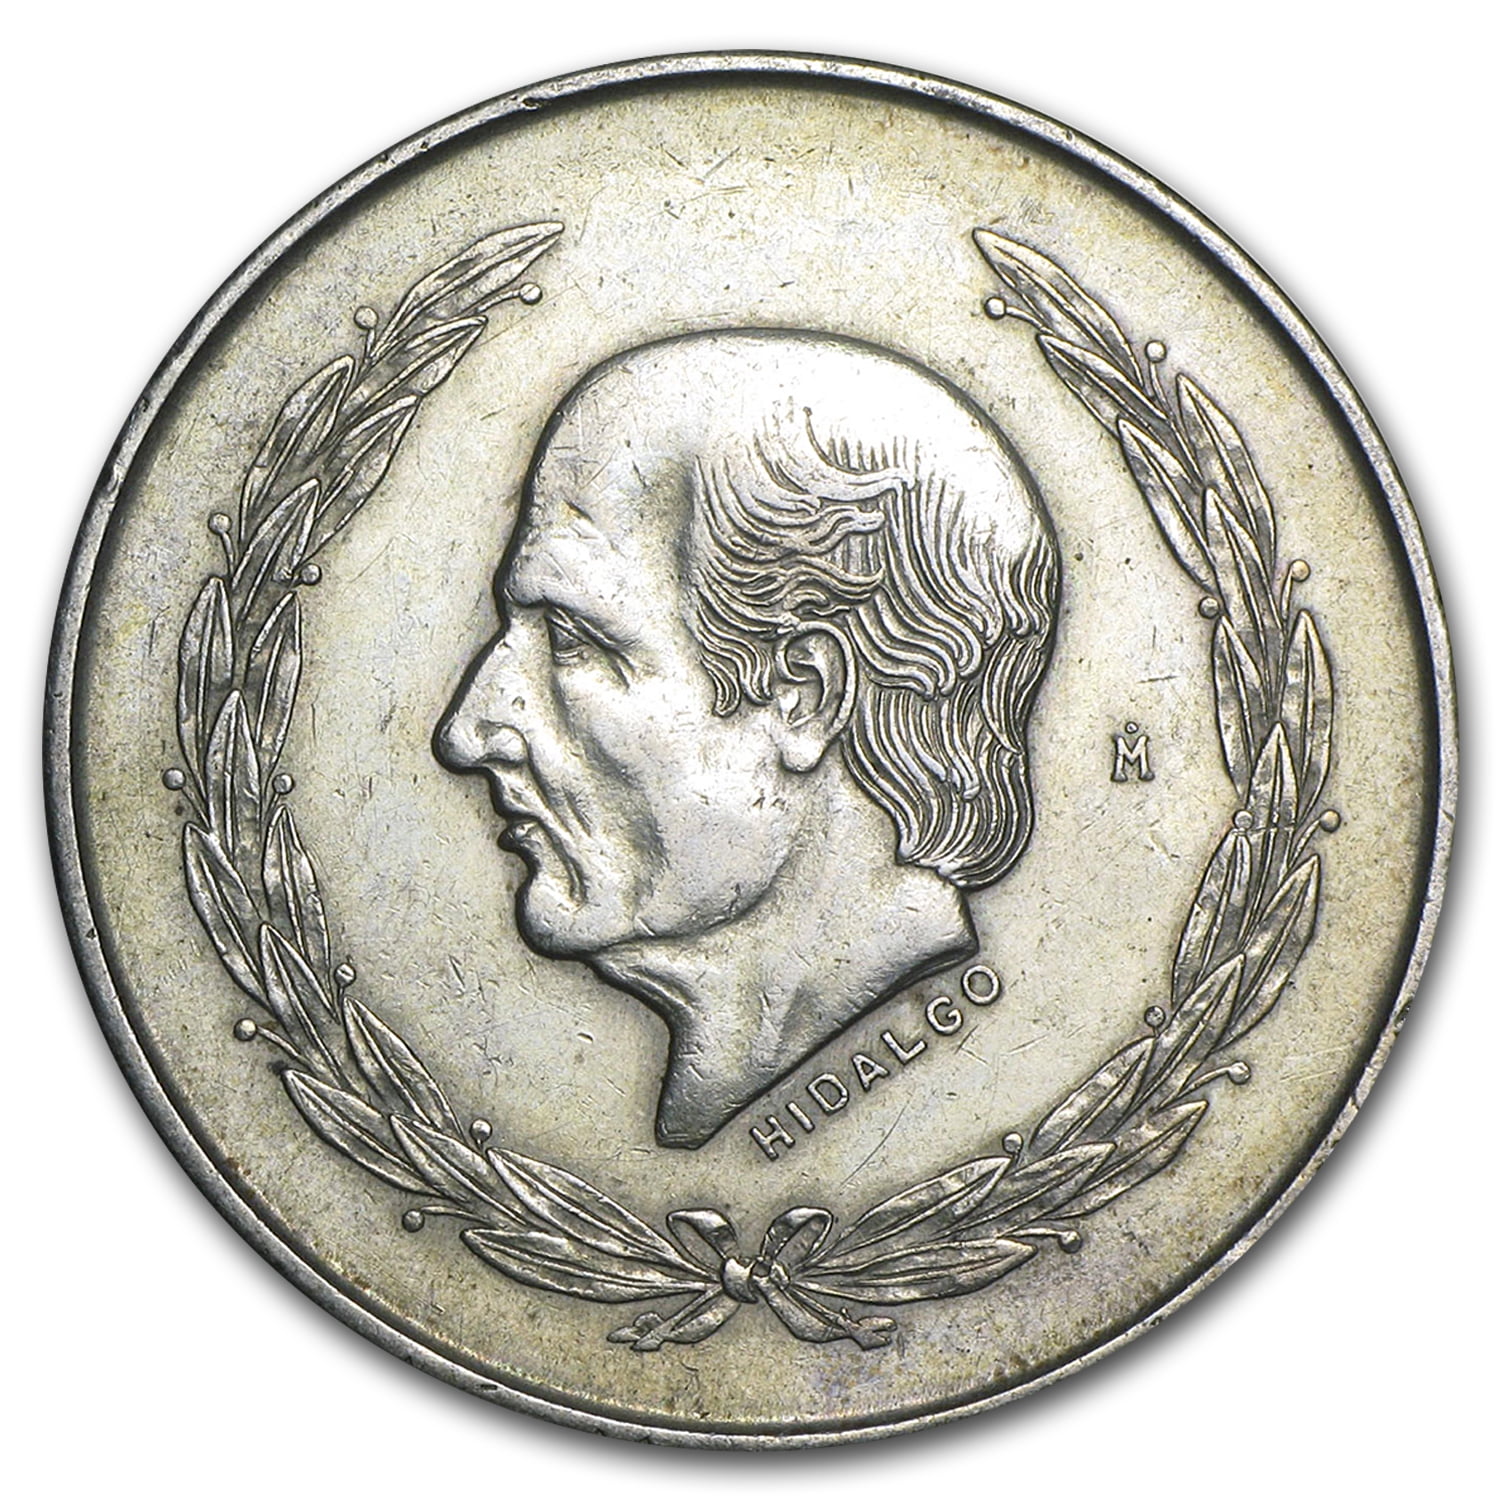 Mint in Case & COA 2011 Winter Town $10 Fine Silver Coin 